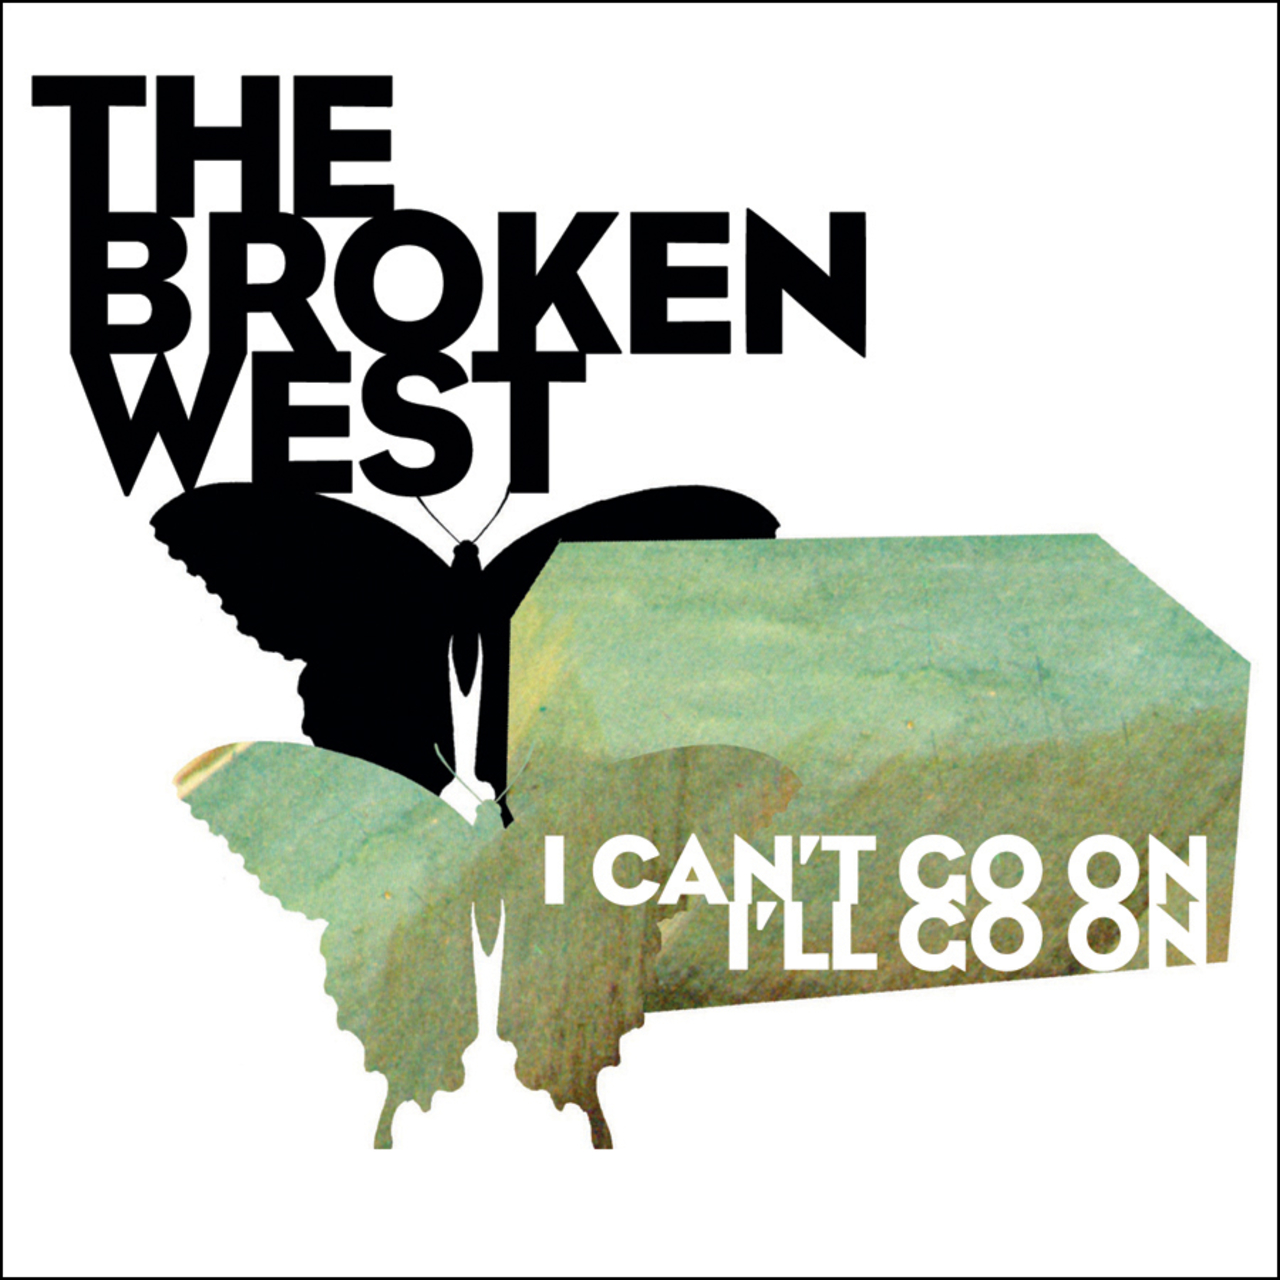 The Broken West's I Can't Go On, I'll Go On is out now.